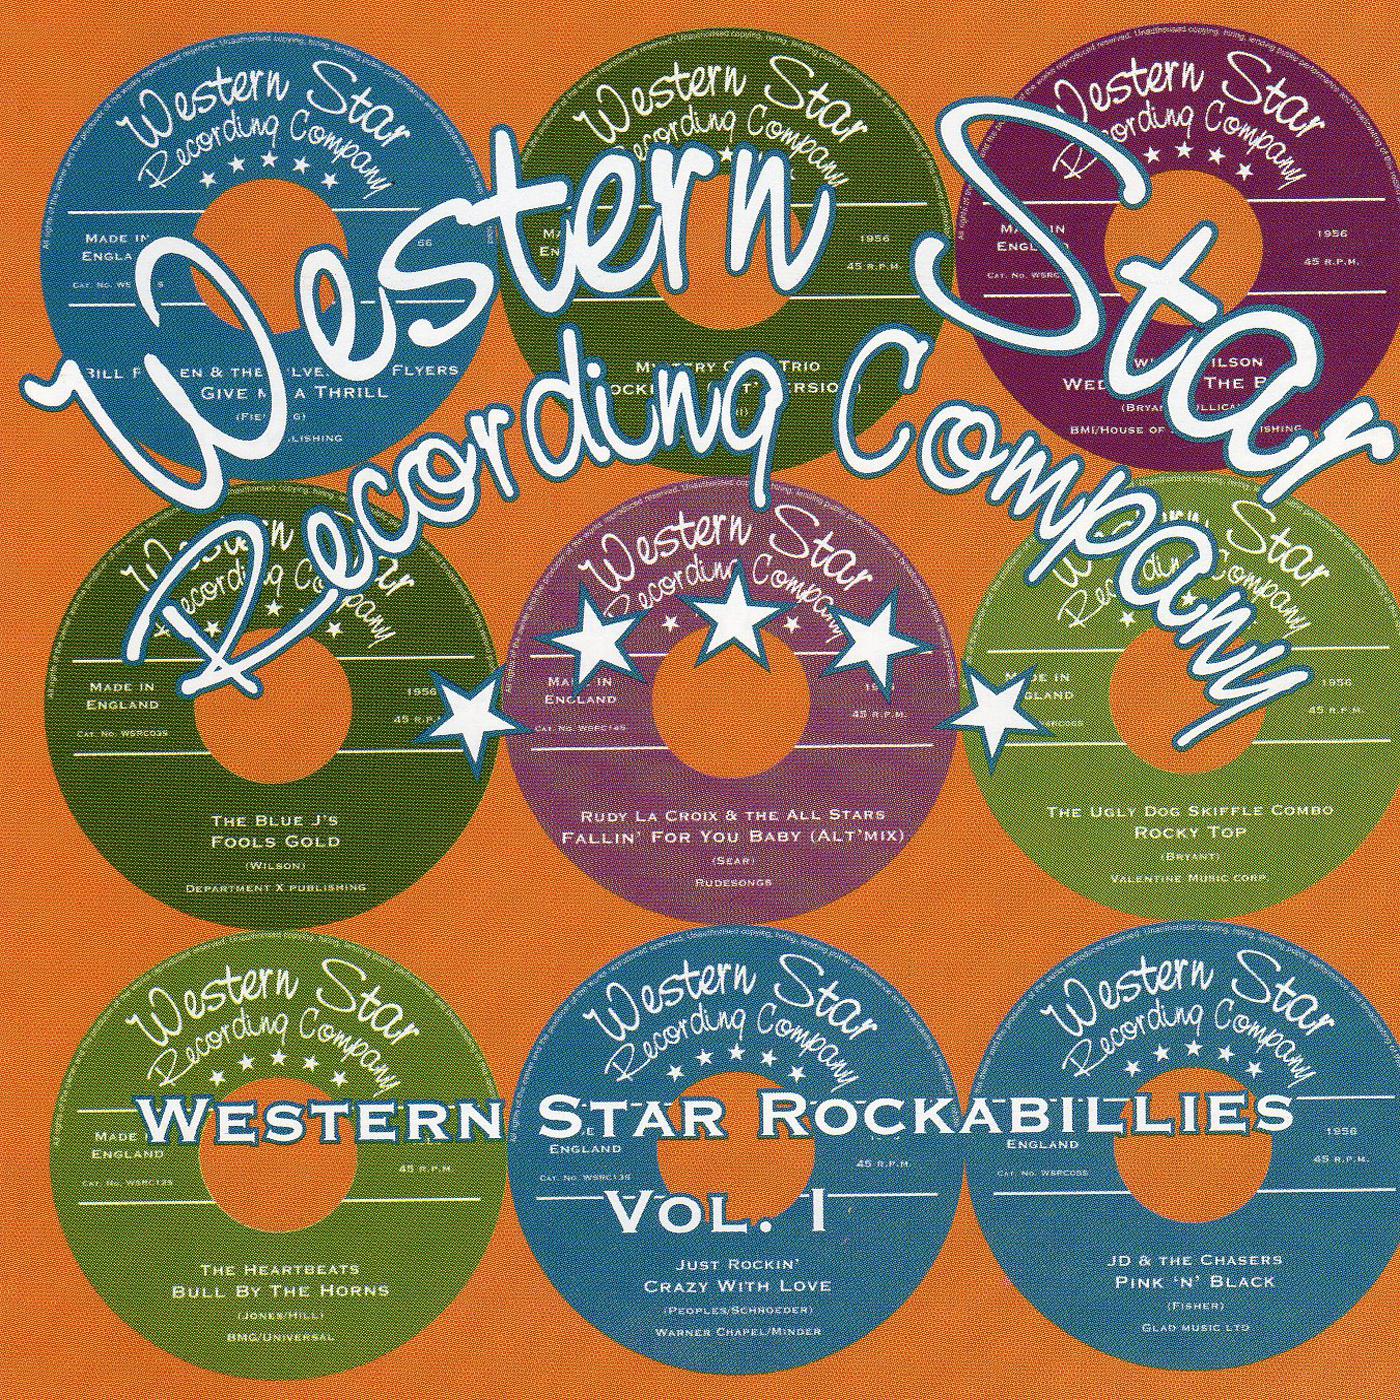 Western Star Rockabillies Vol. 1